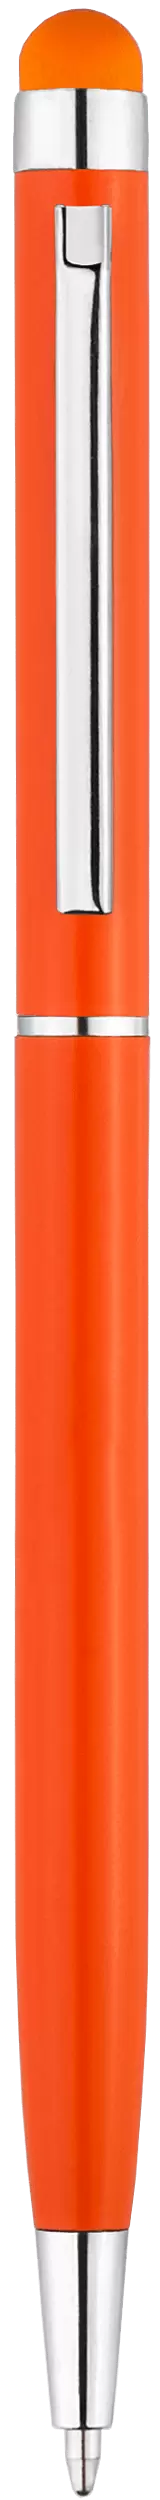 Ручка KENO Оранжевая 1117-05